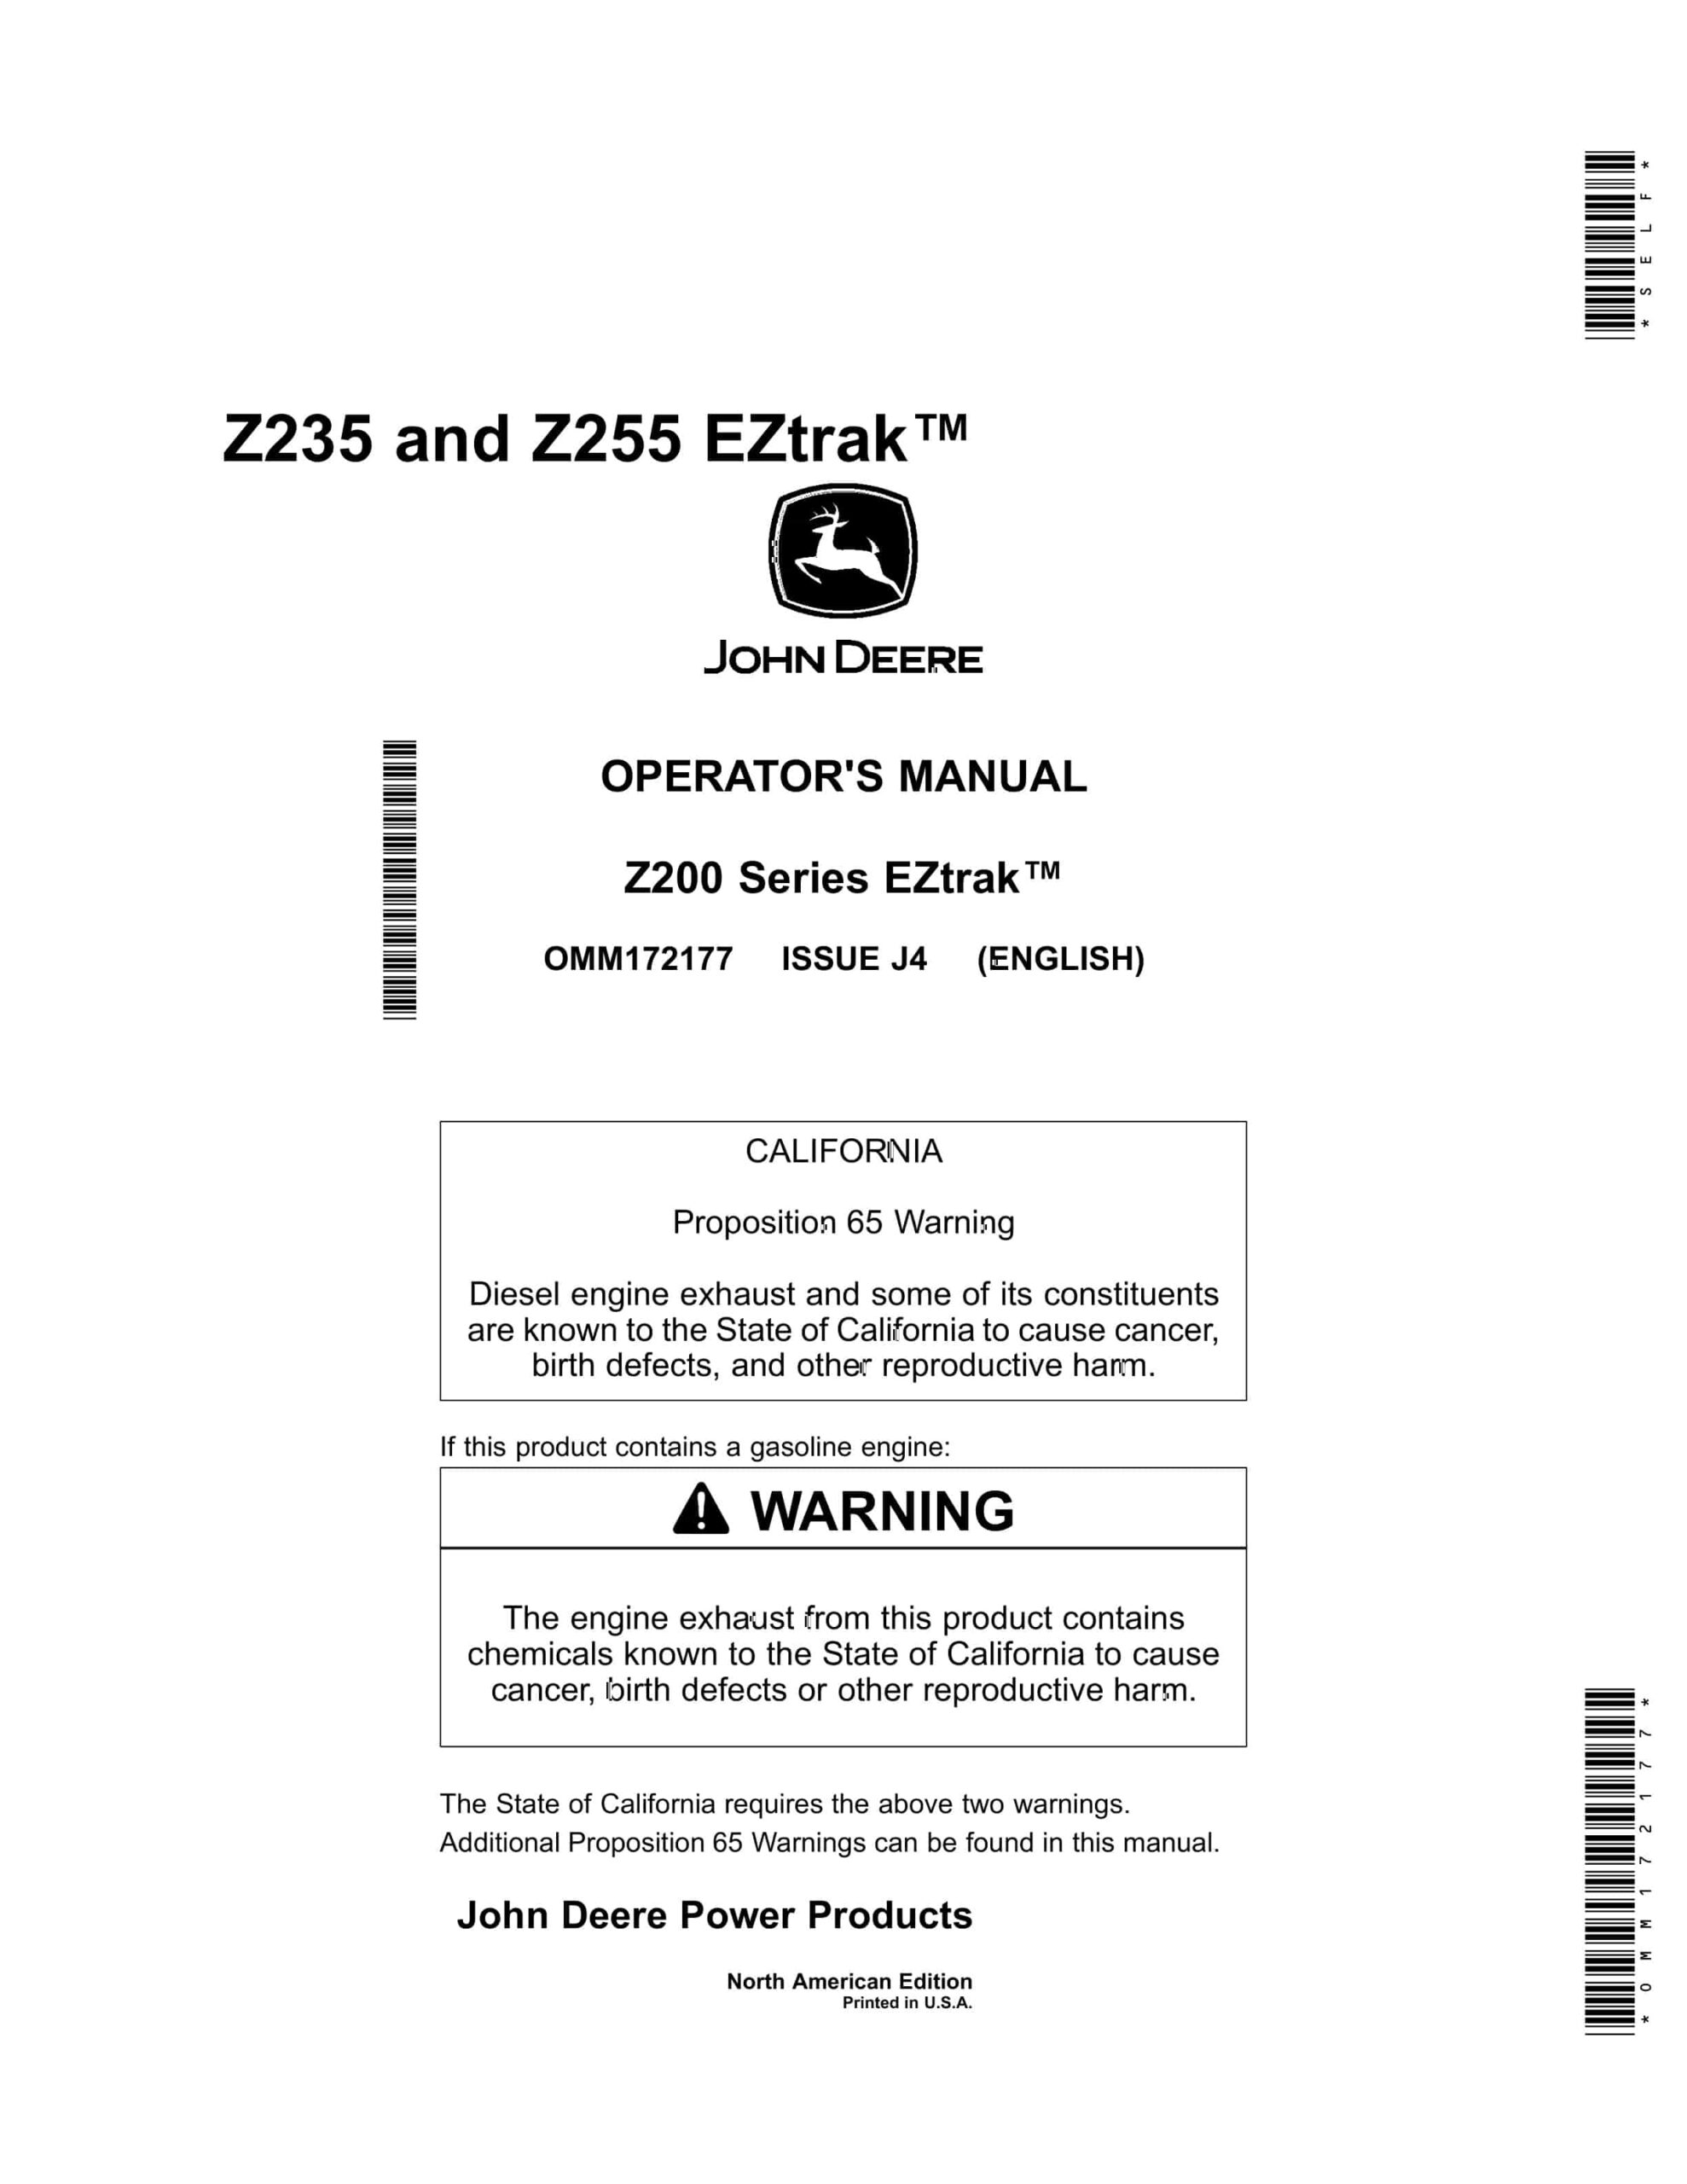 John Deere Z235 and Z255 EZtrak Operator Manual OMM172177-1